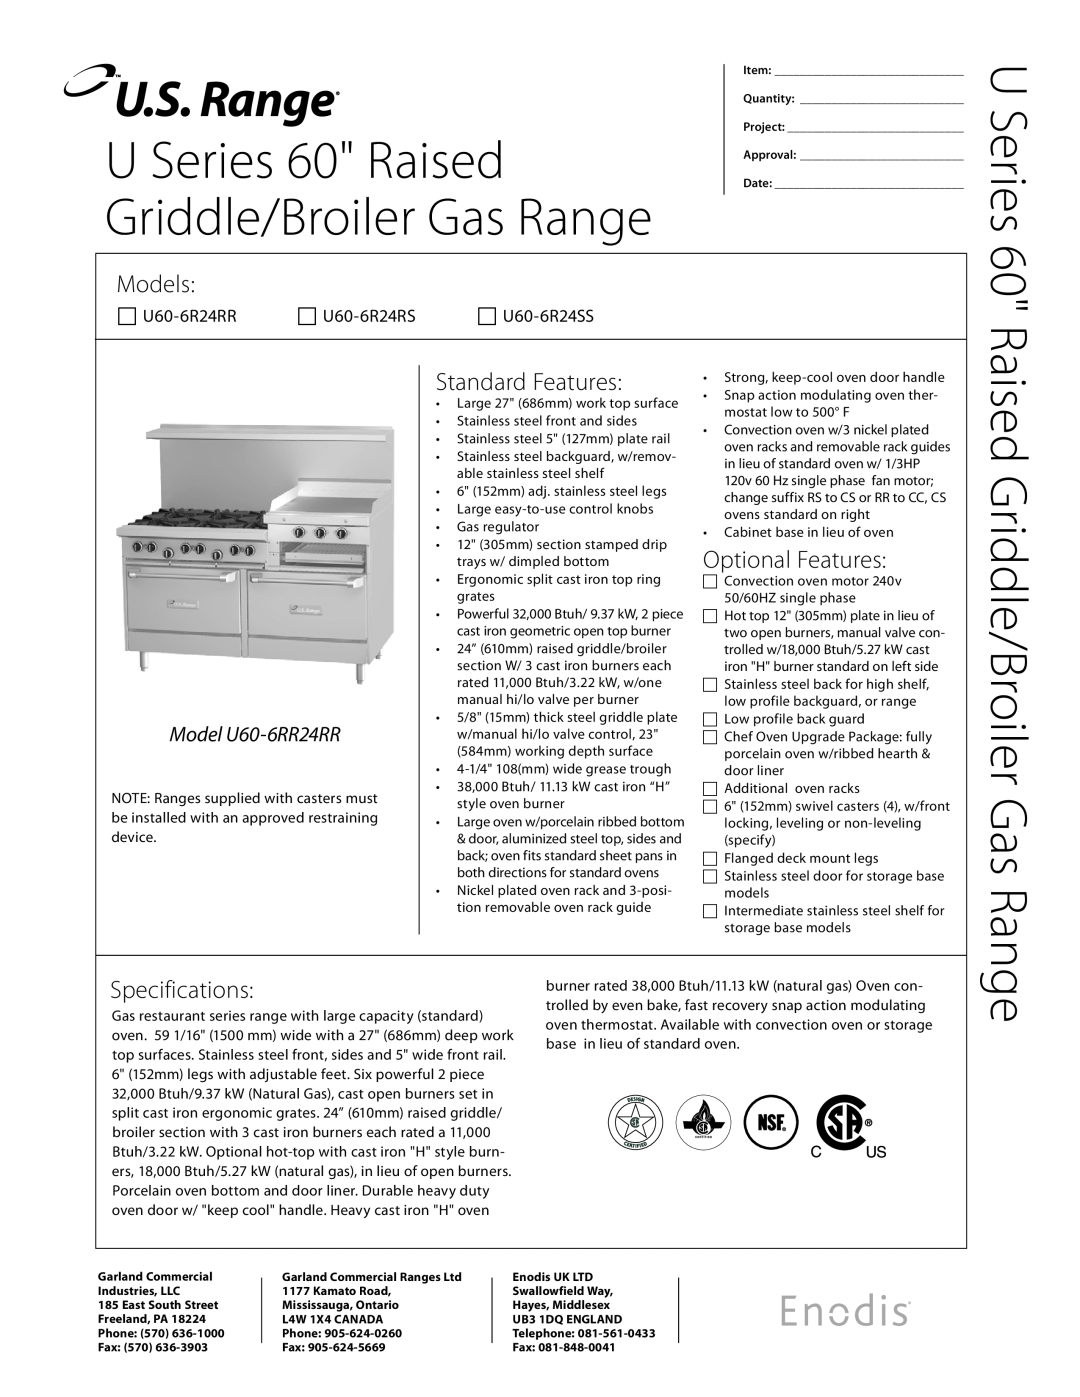 Garland specifications U Series 60 Raised, Raised Griddle/Broiler Gas Range, Models, Standard Features 